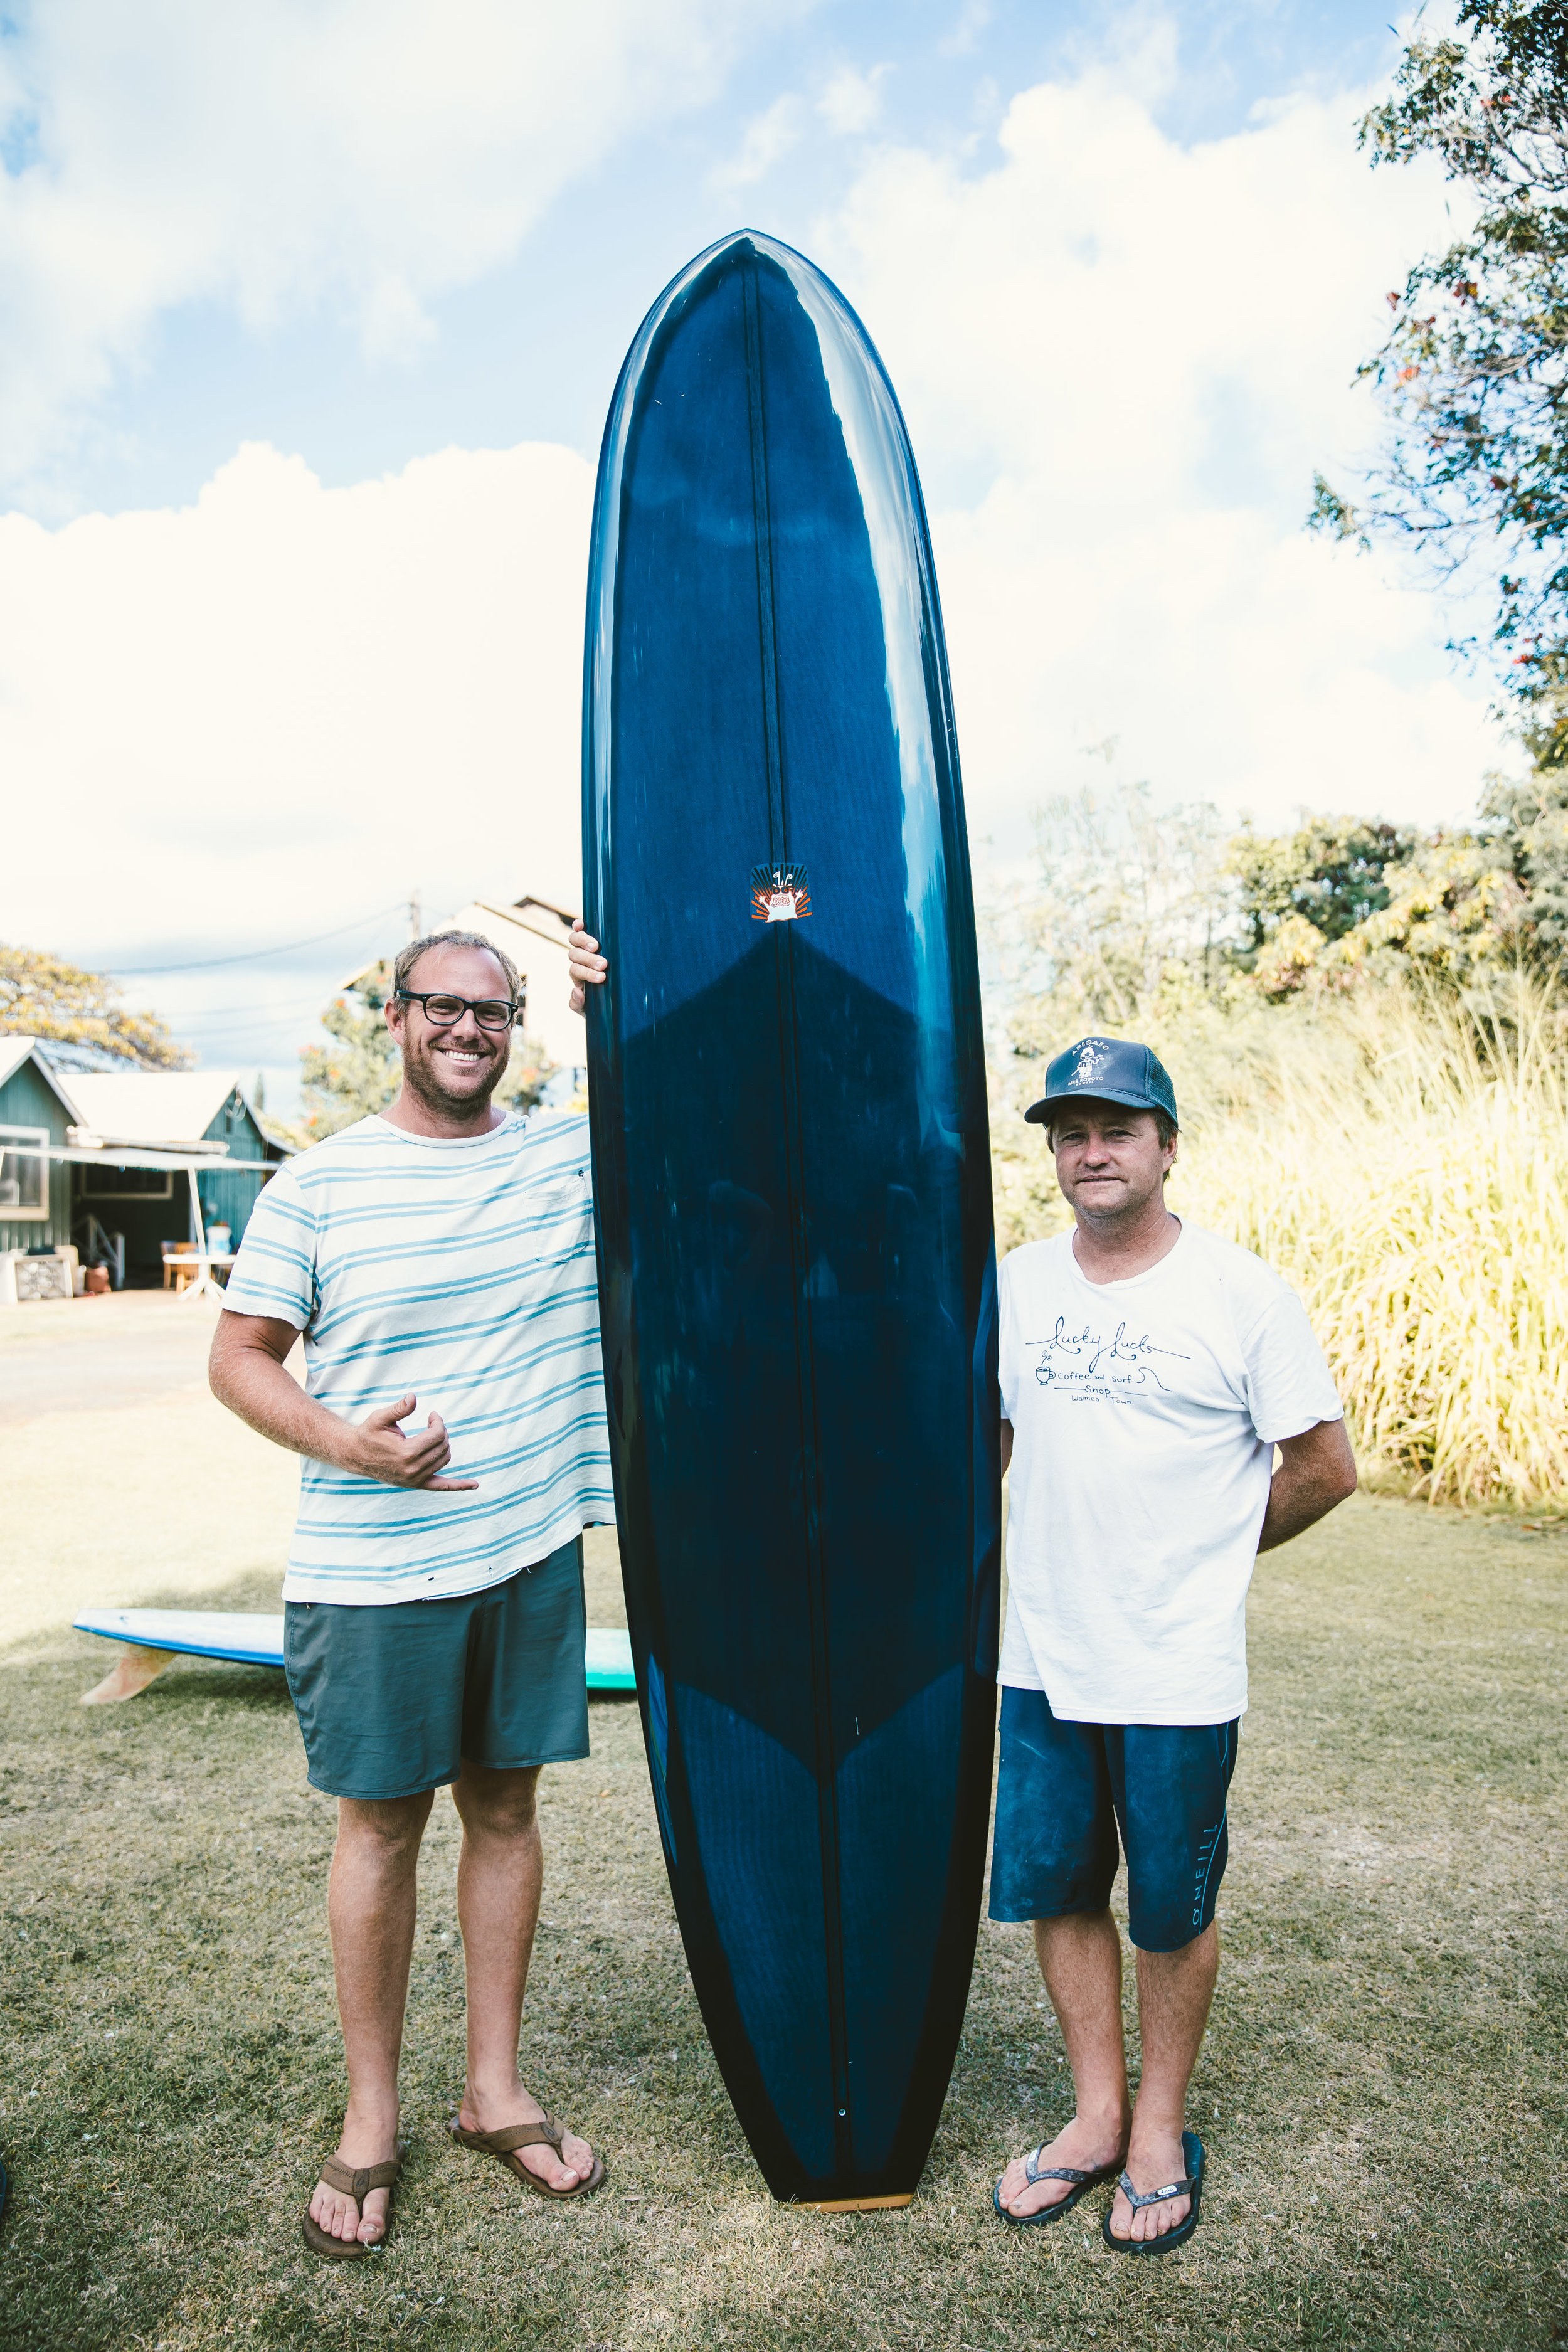 bryce johnson-photography-ebert surfboards-kauai-42.jpg